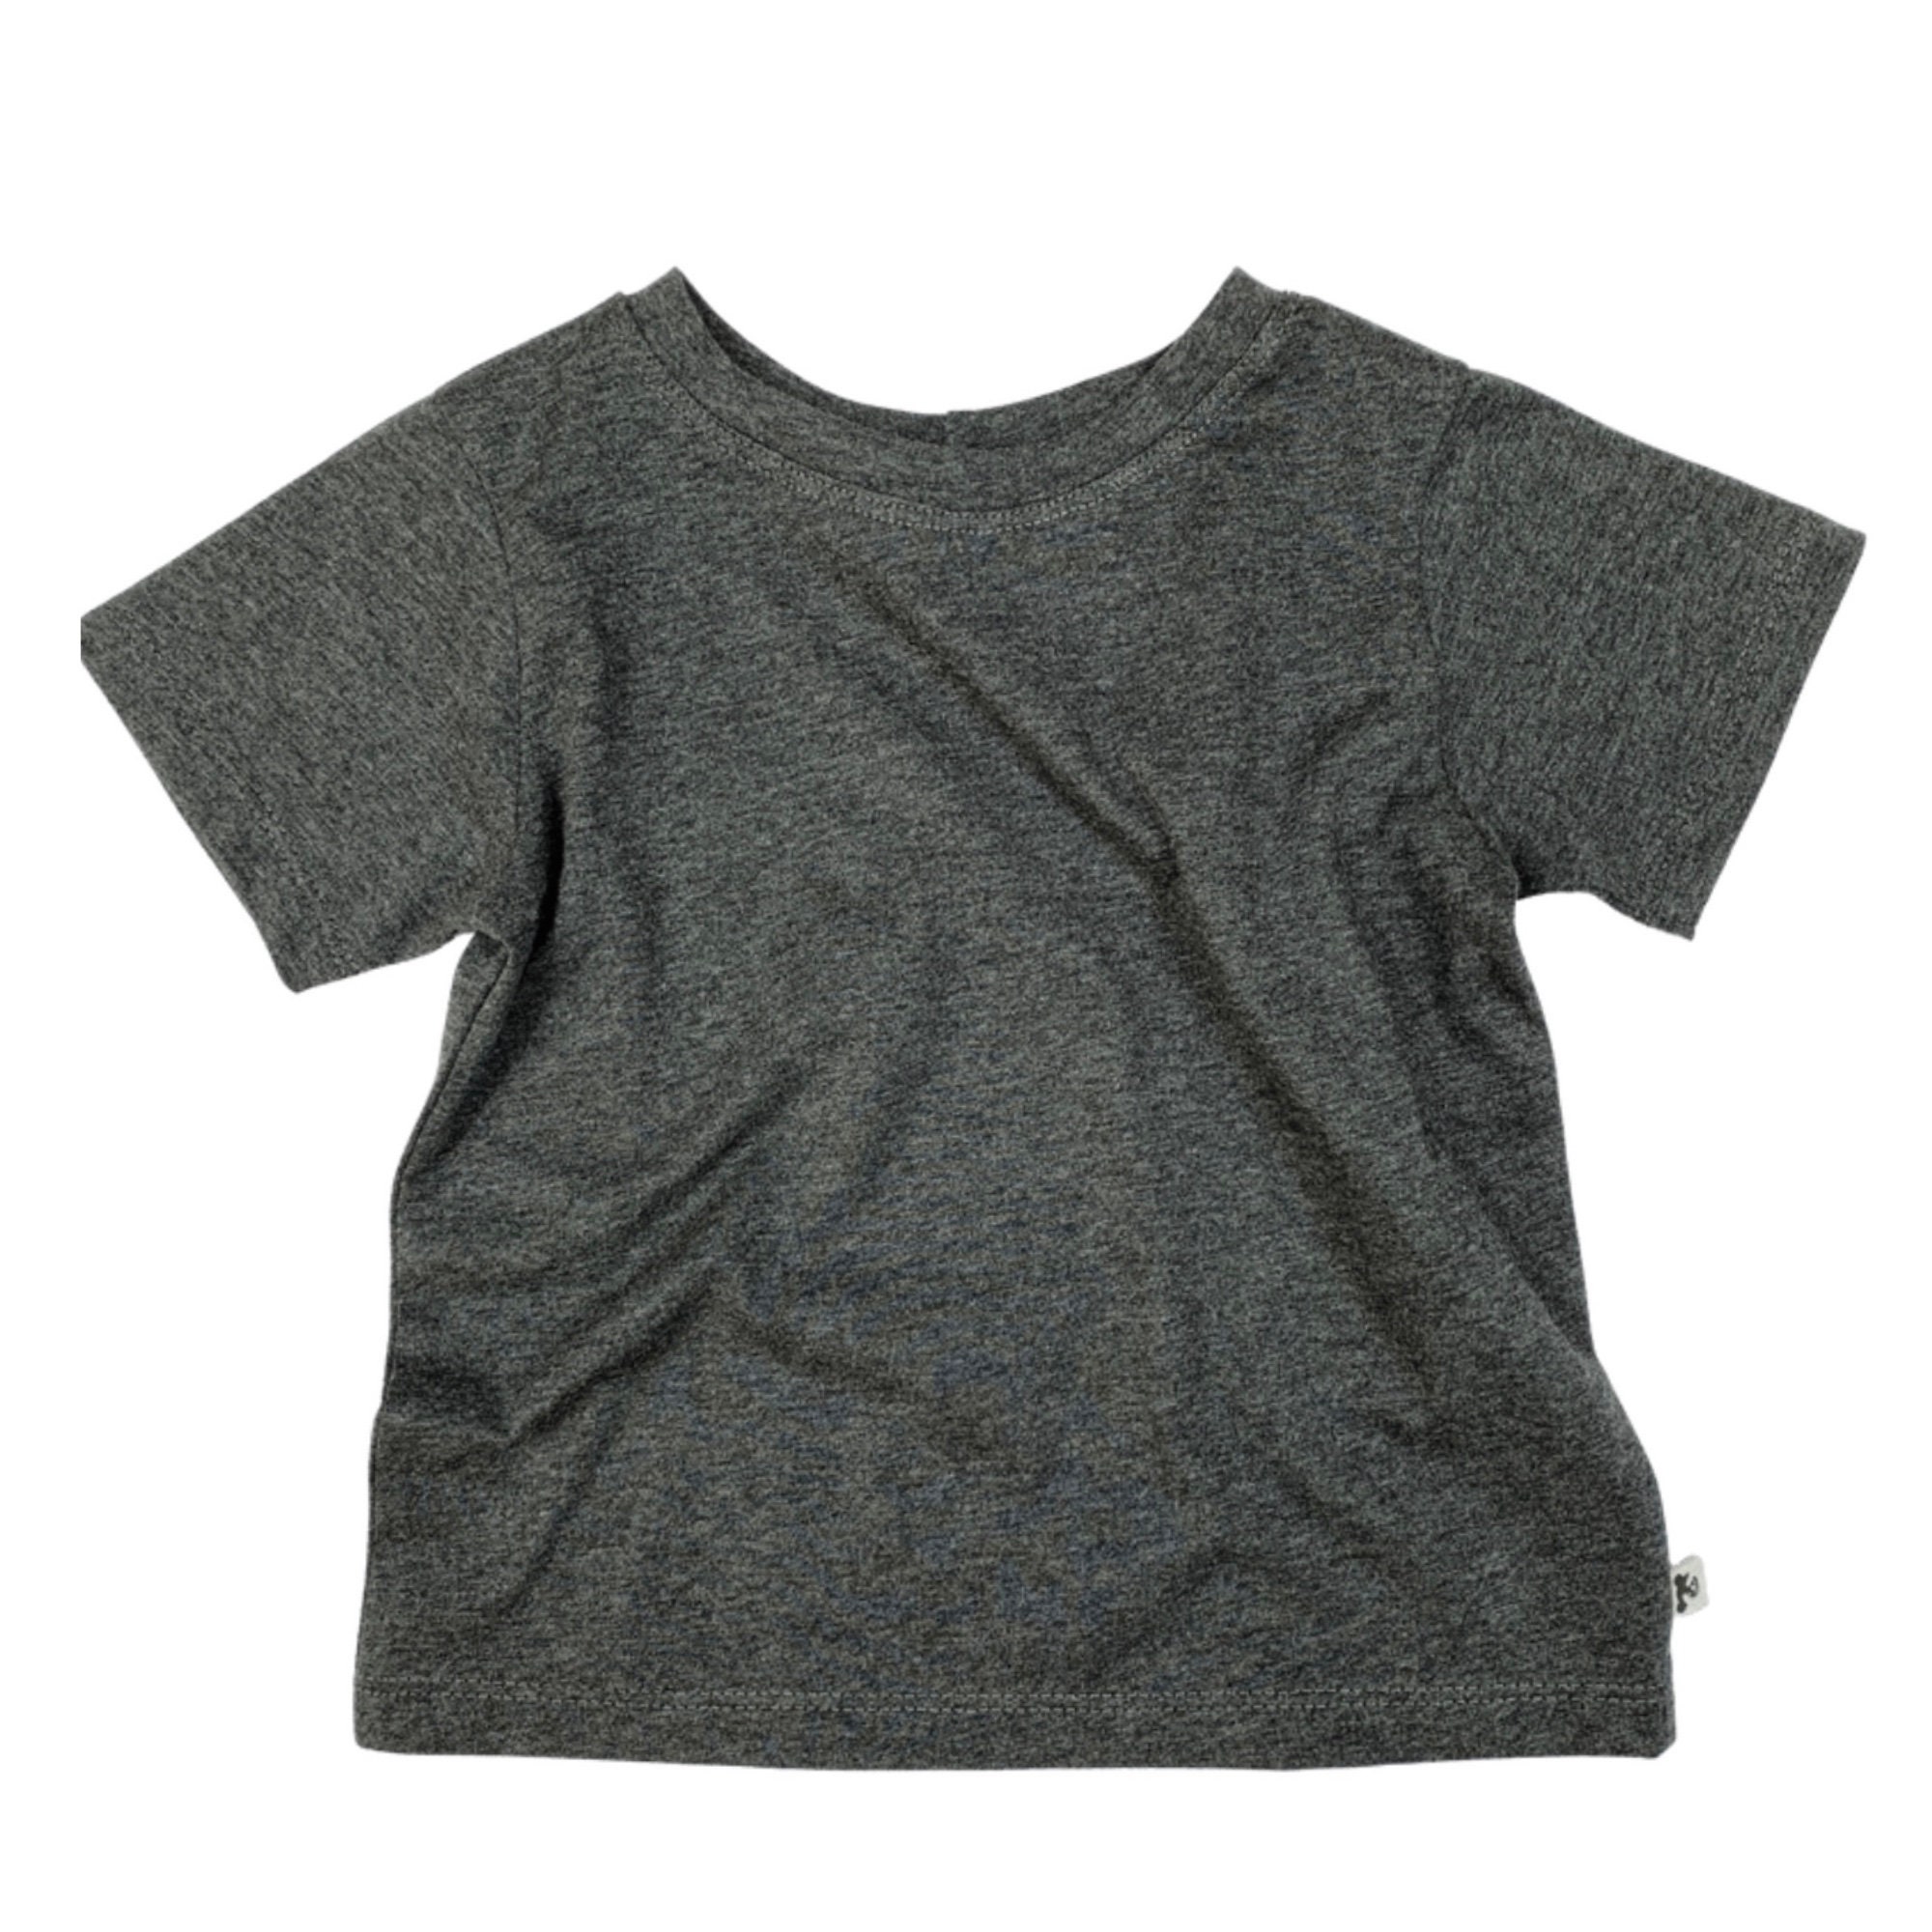 Organic kids tee Charcoal Marle Unisex t-shirt Tee shirt GOTS Certified ...